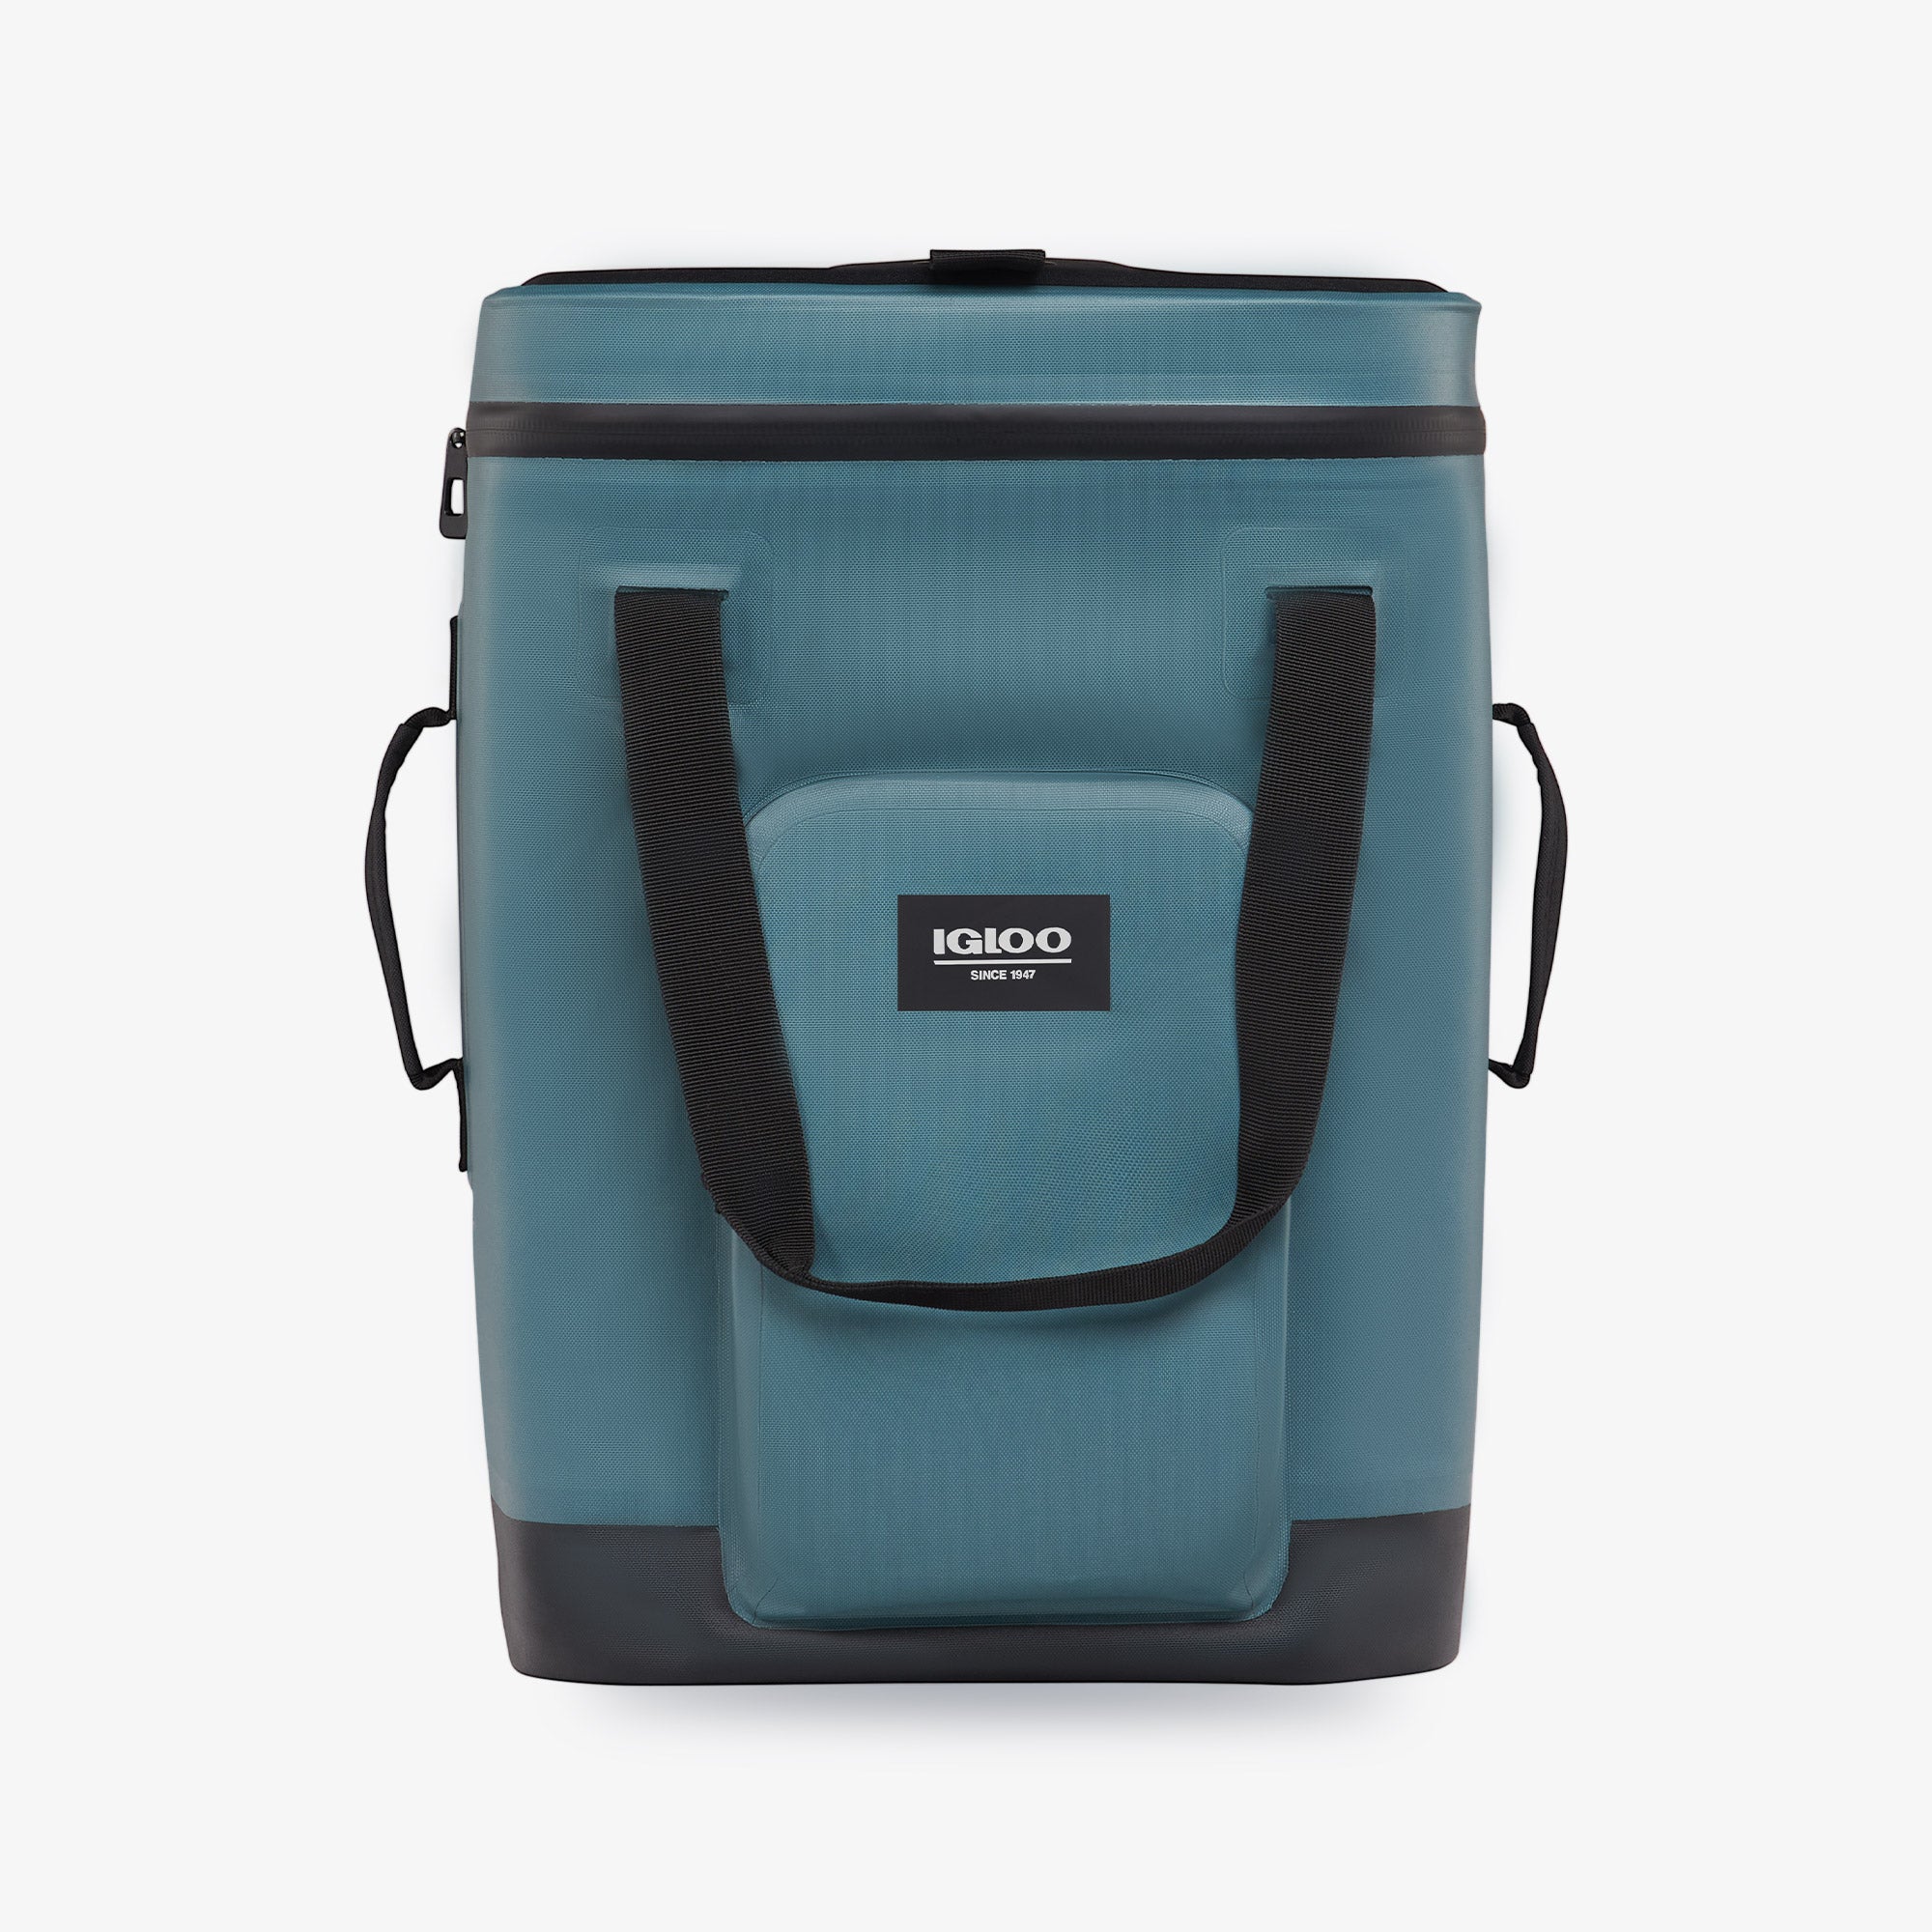 MaxCold Evergreen Top Grip Backpack | Igloo